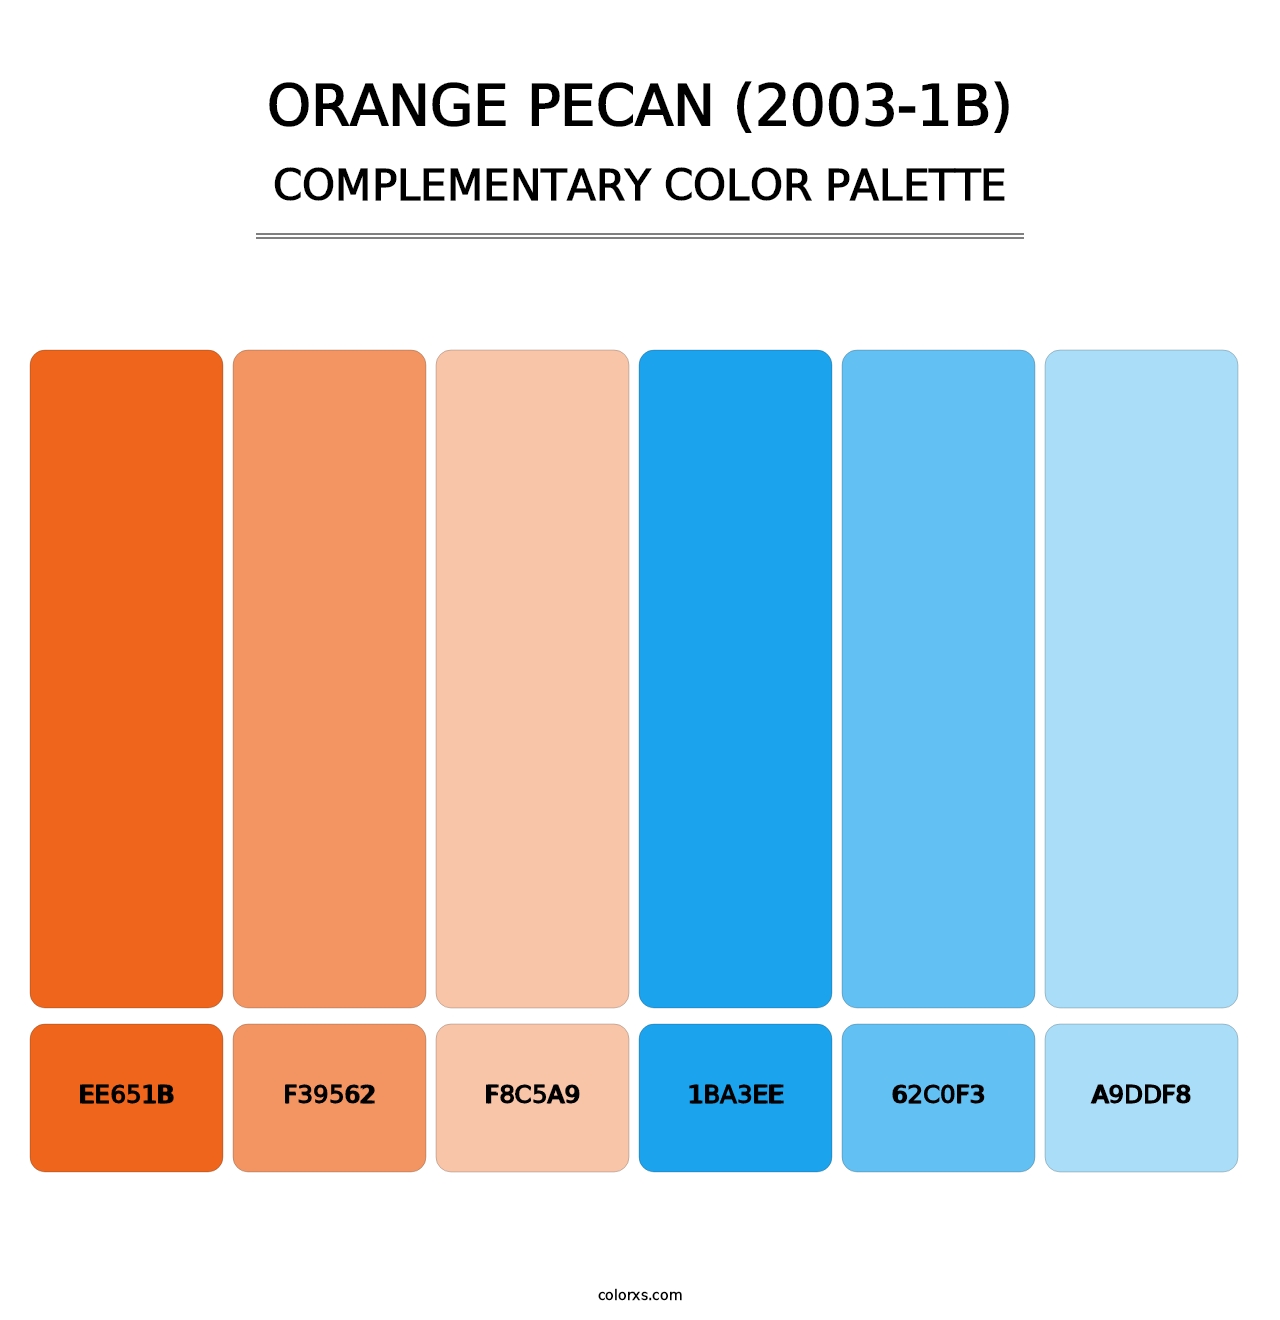 Orange Pecan (2003-1B) - Complementary Color Palette